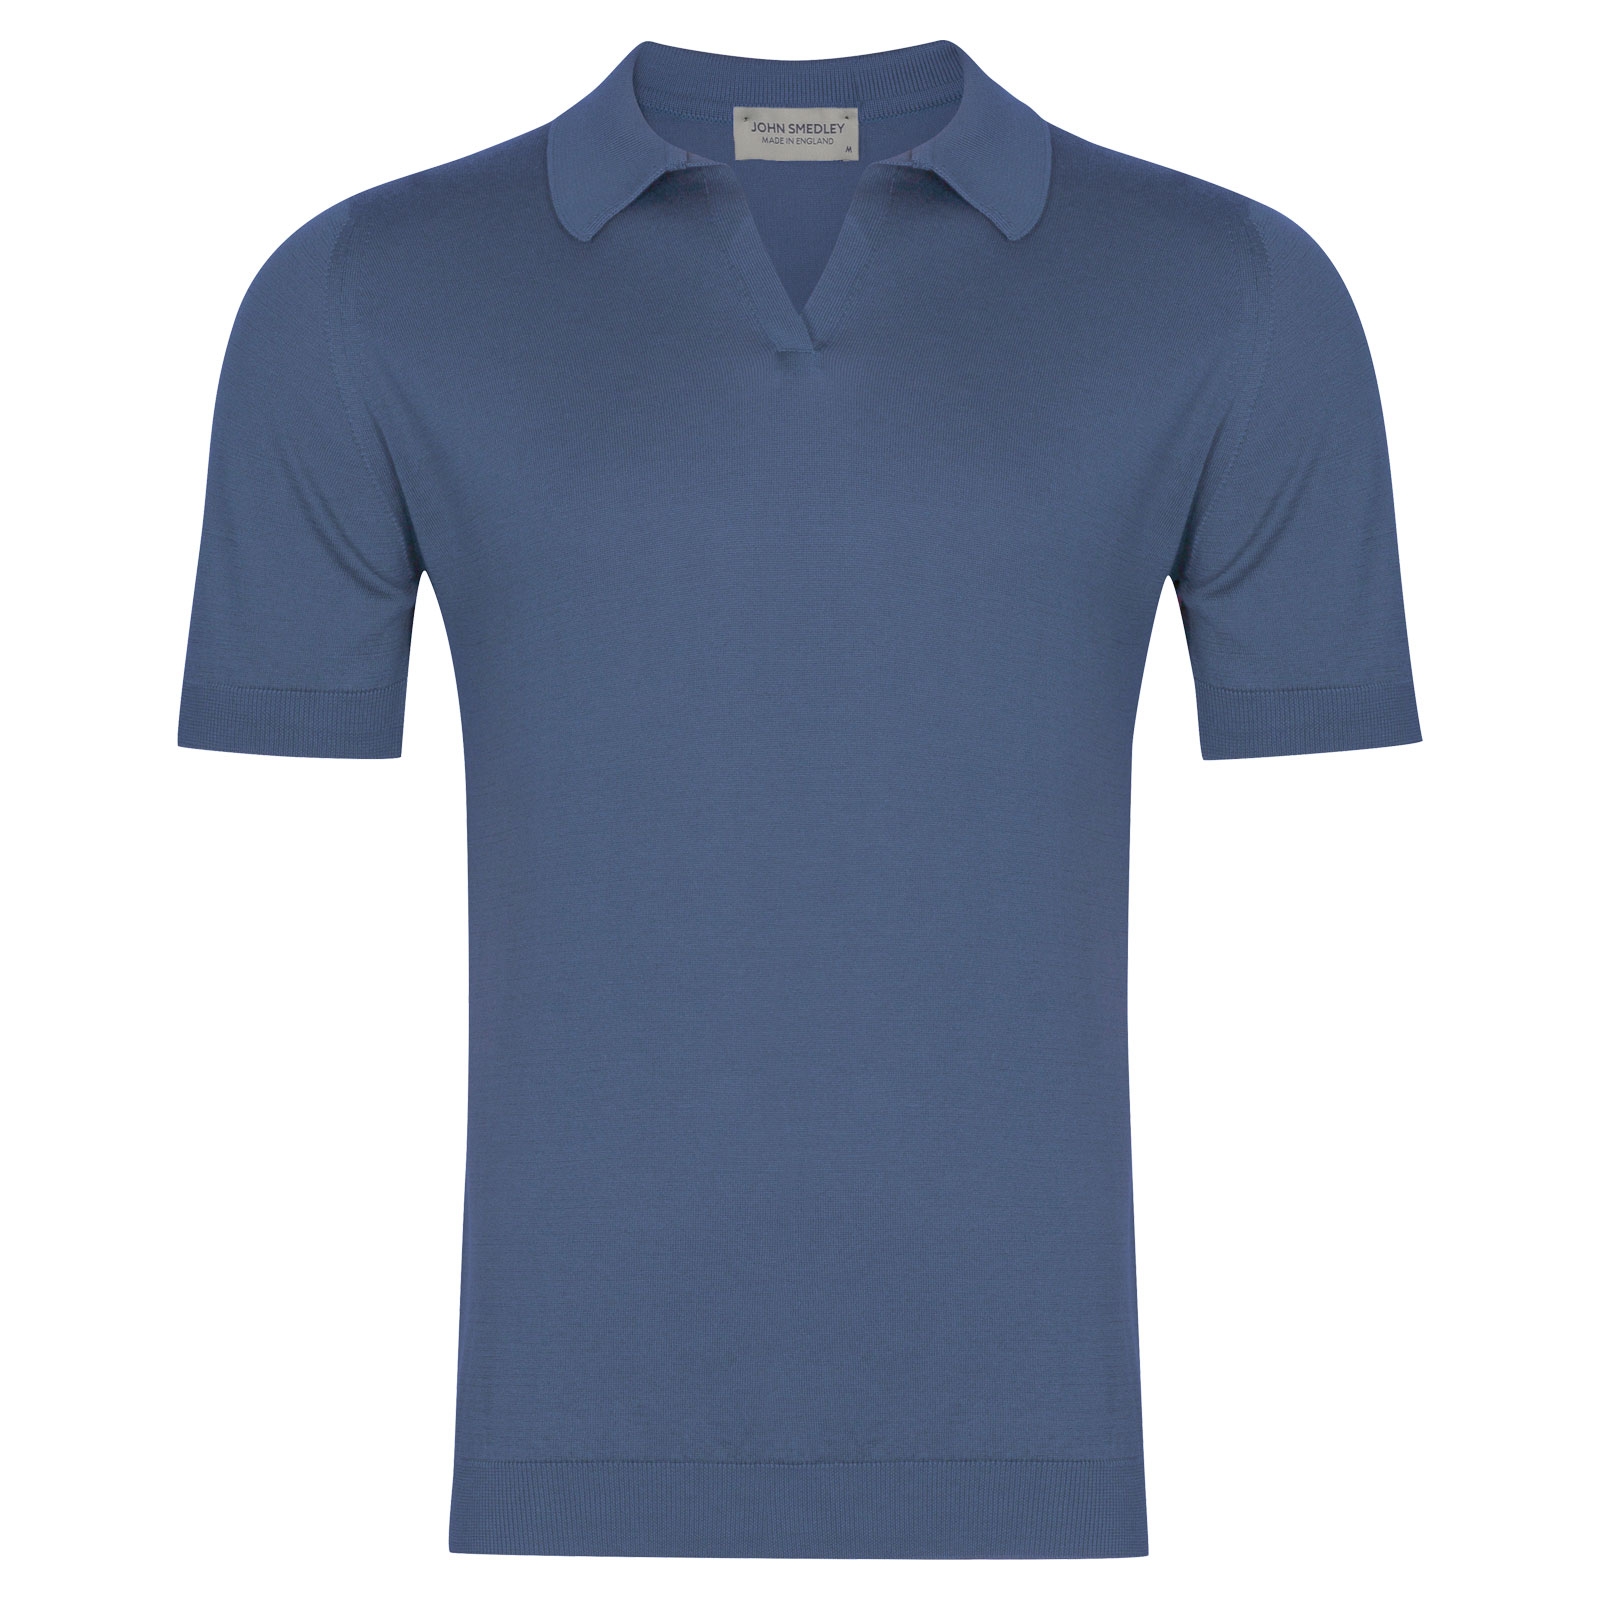 John Smedley Ancona in Blue Iris Shirt-SML